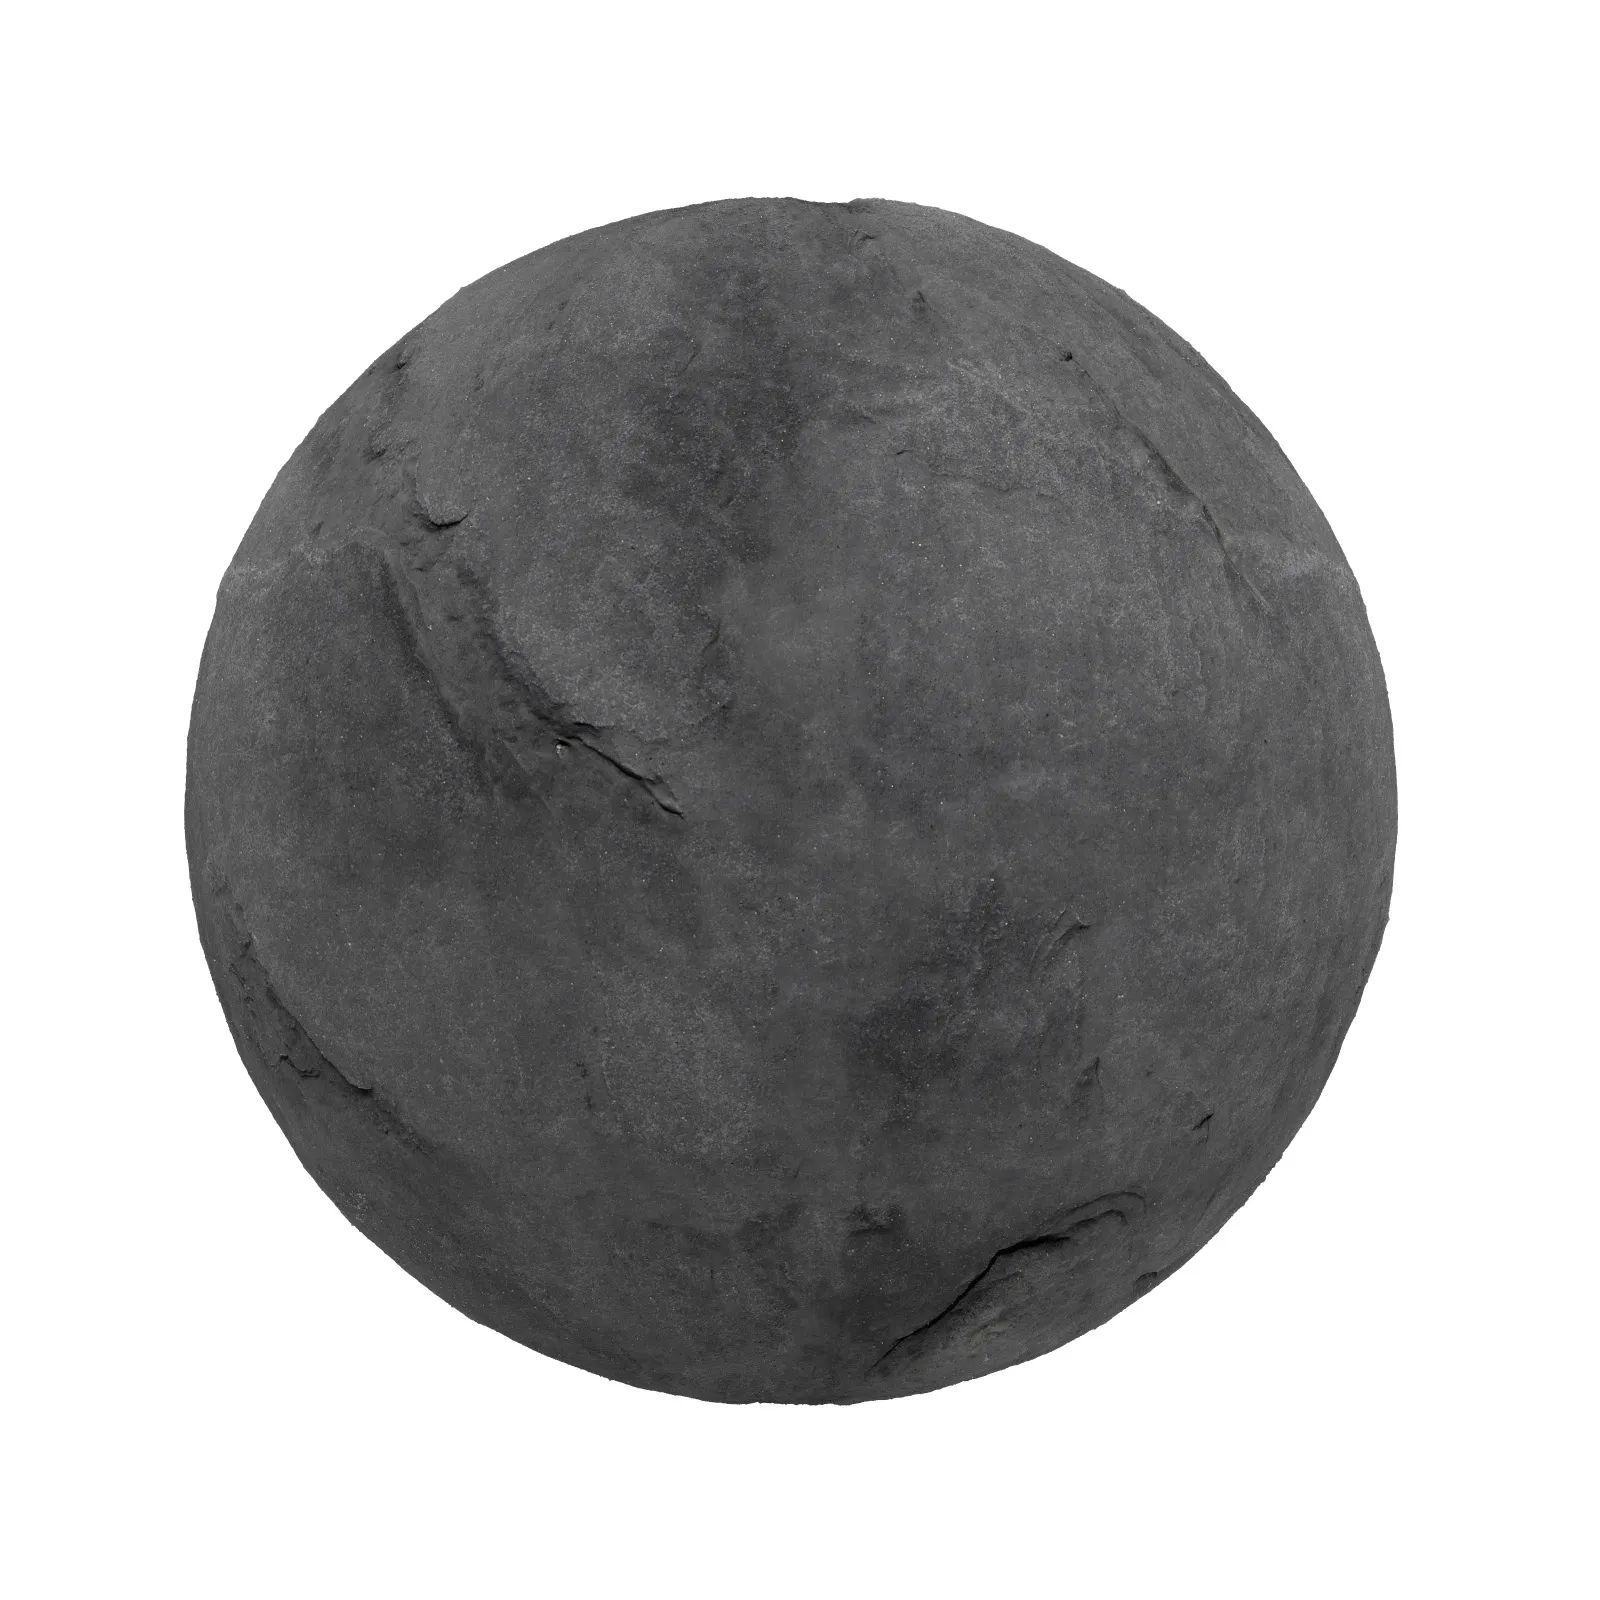 TEXTURES – STONES – CGAxis PBR Colection Vol 1 Stones – black stone